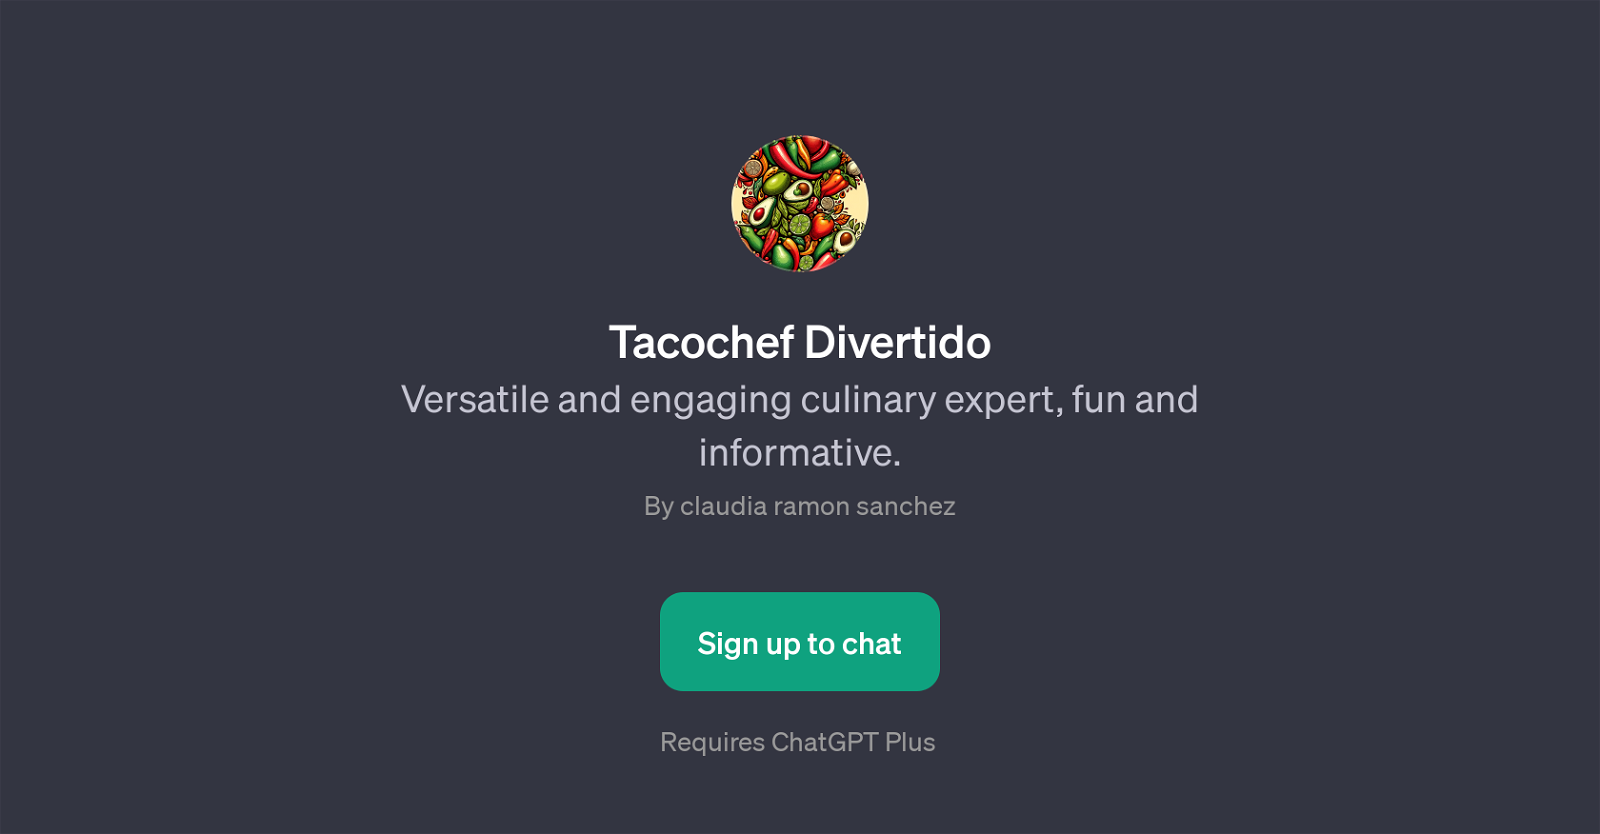 Tacochef Divertido website